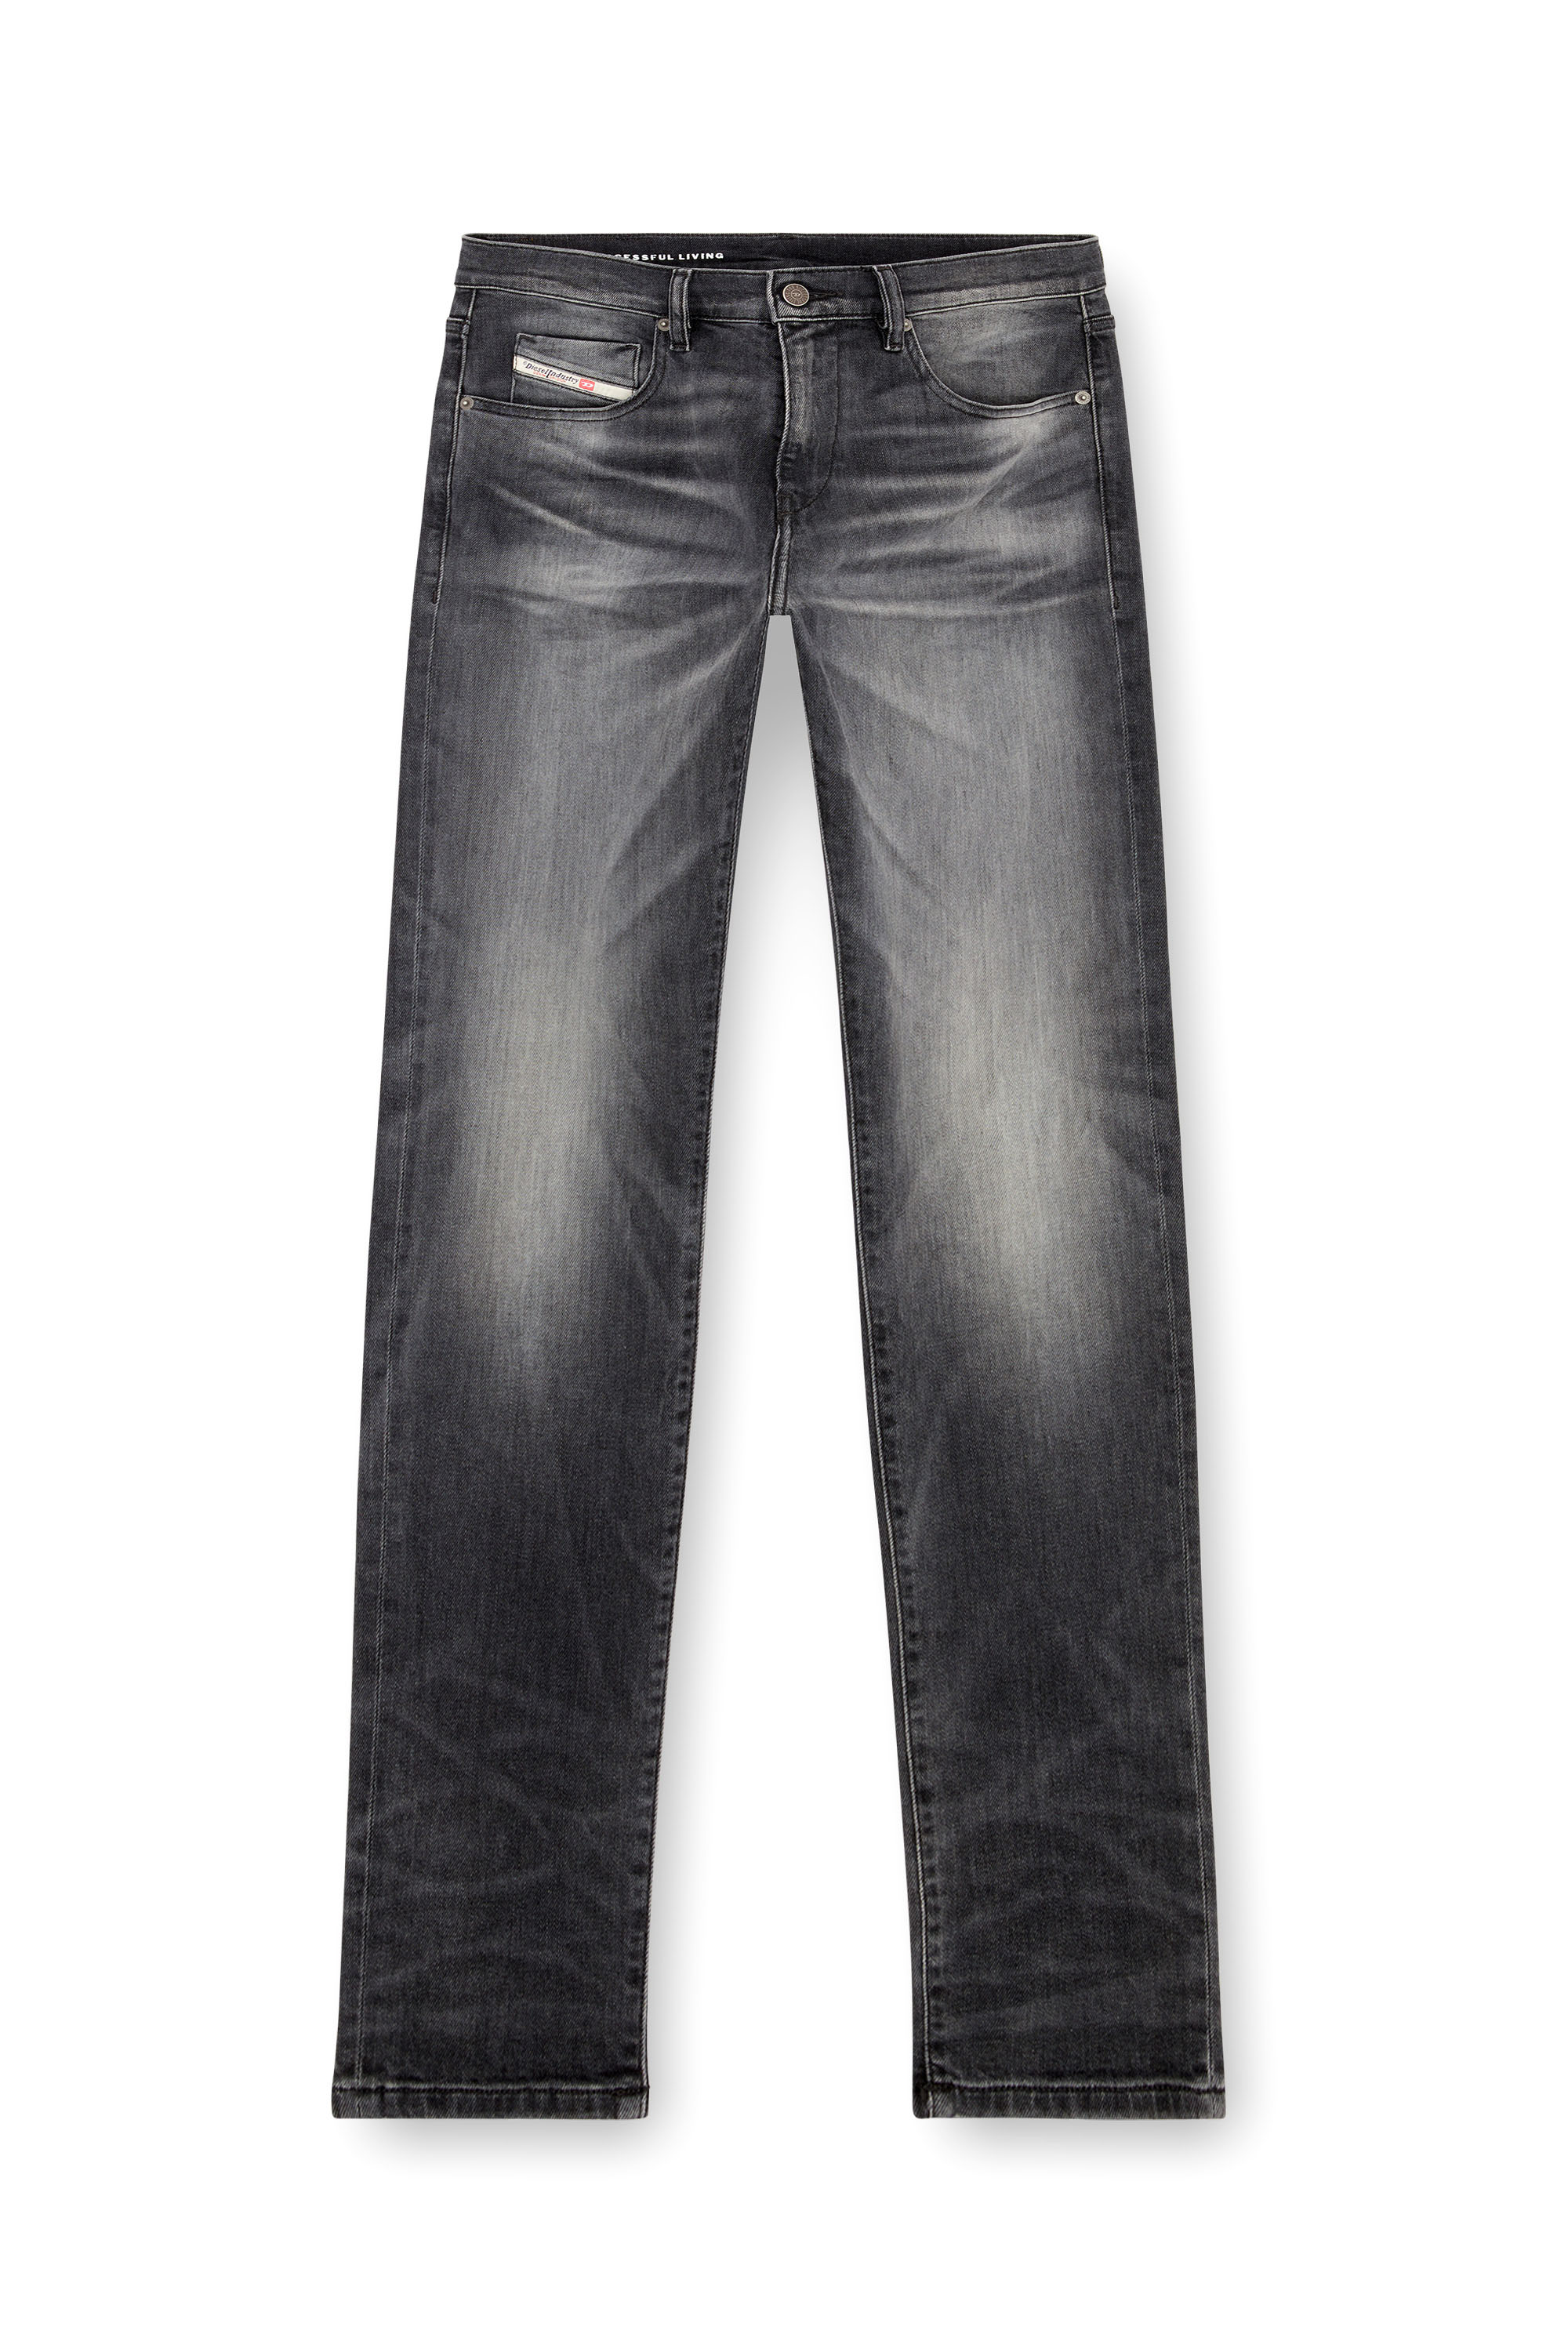 Diesel - Slim Jeans 2019 D-Strukt 09J52, Hombre Slim Jeans - 2019 D-Strukt in Negro - Image 3